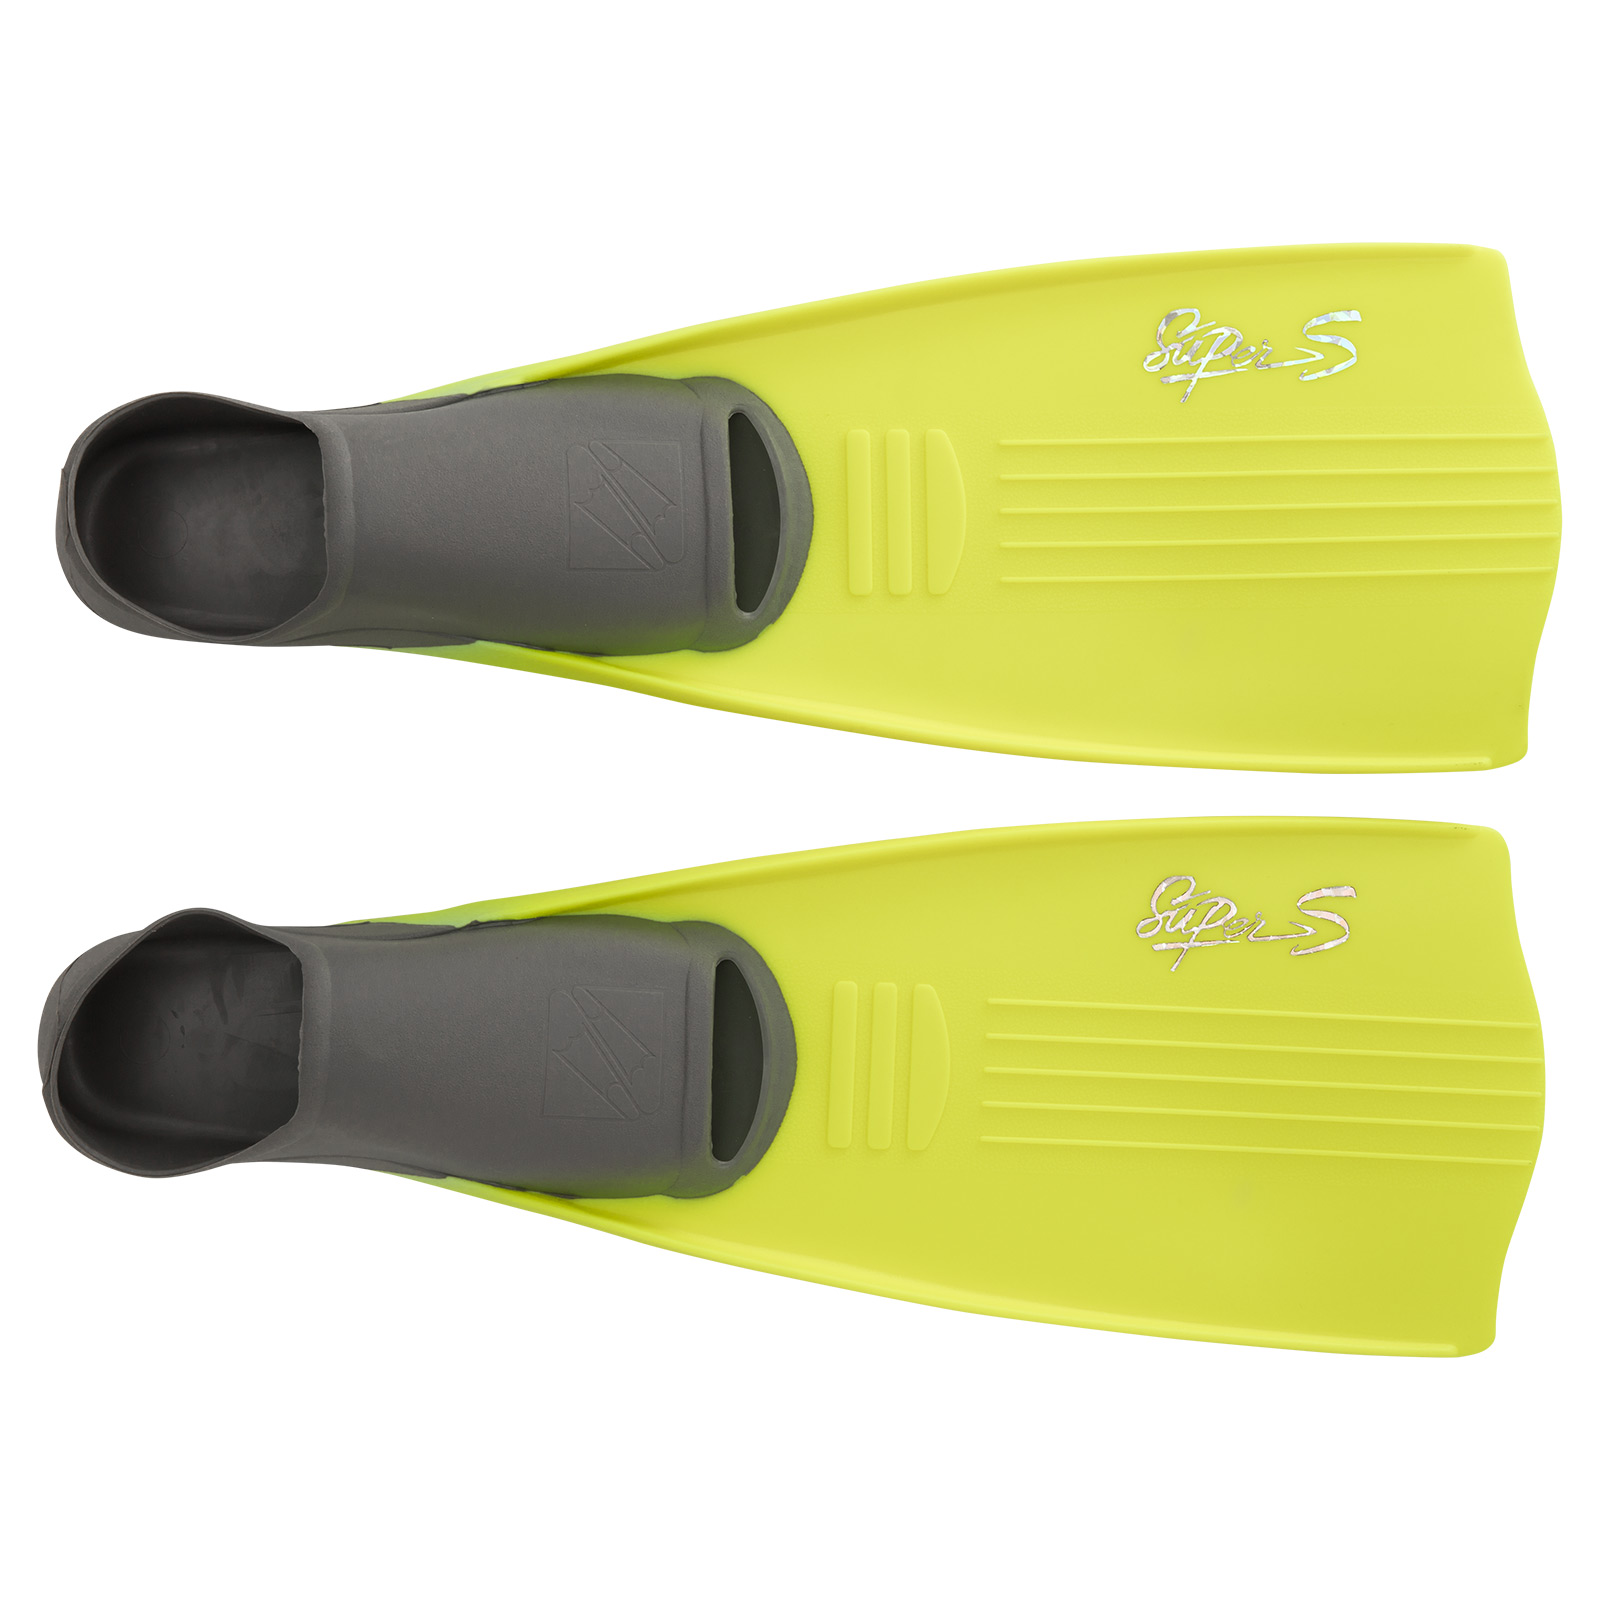 Super S Full Pocket Snorkeling Fins